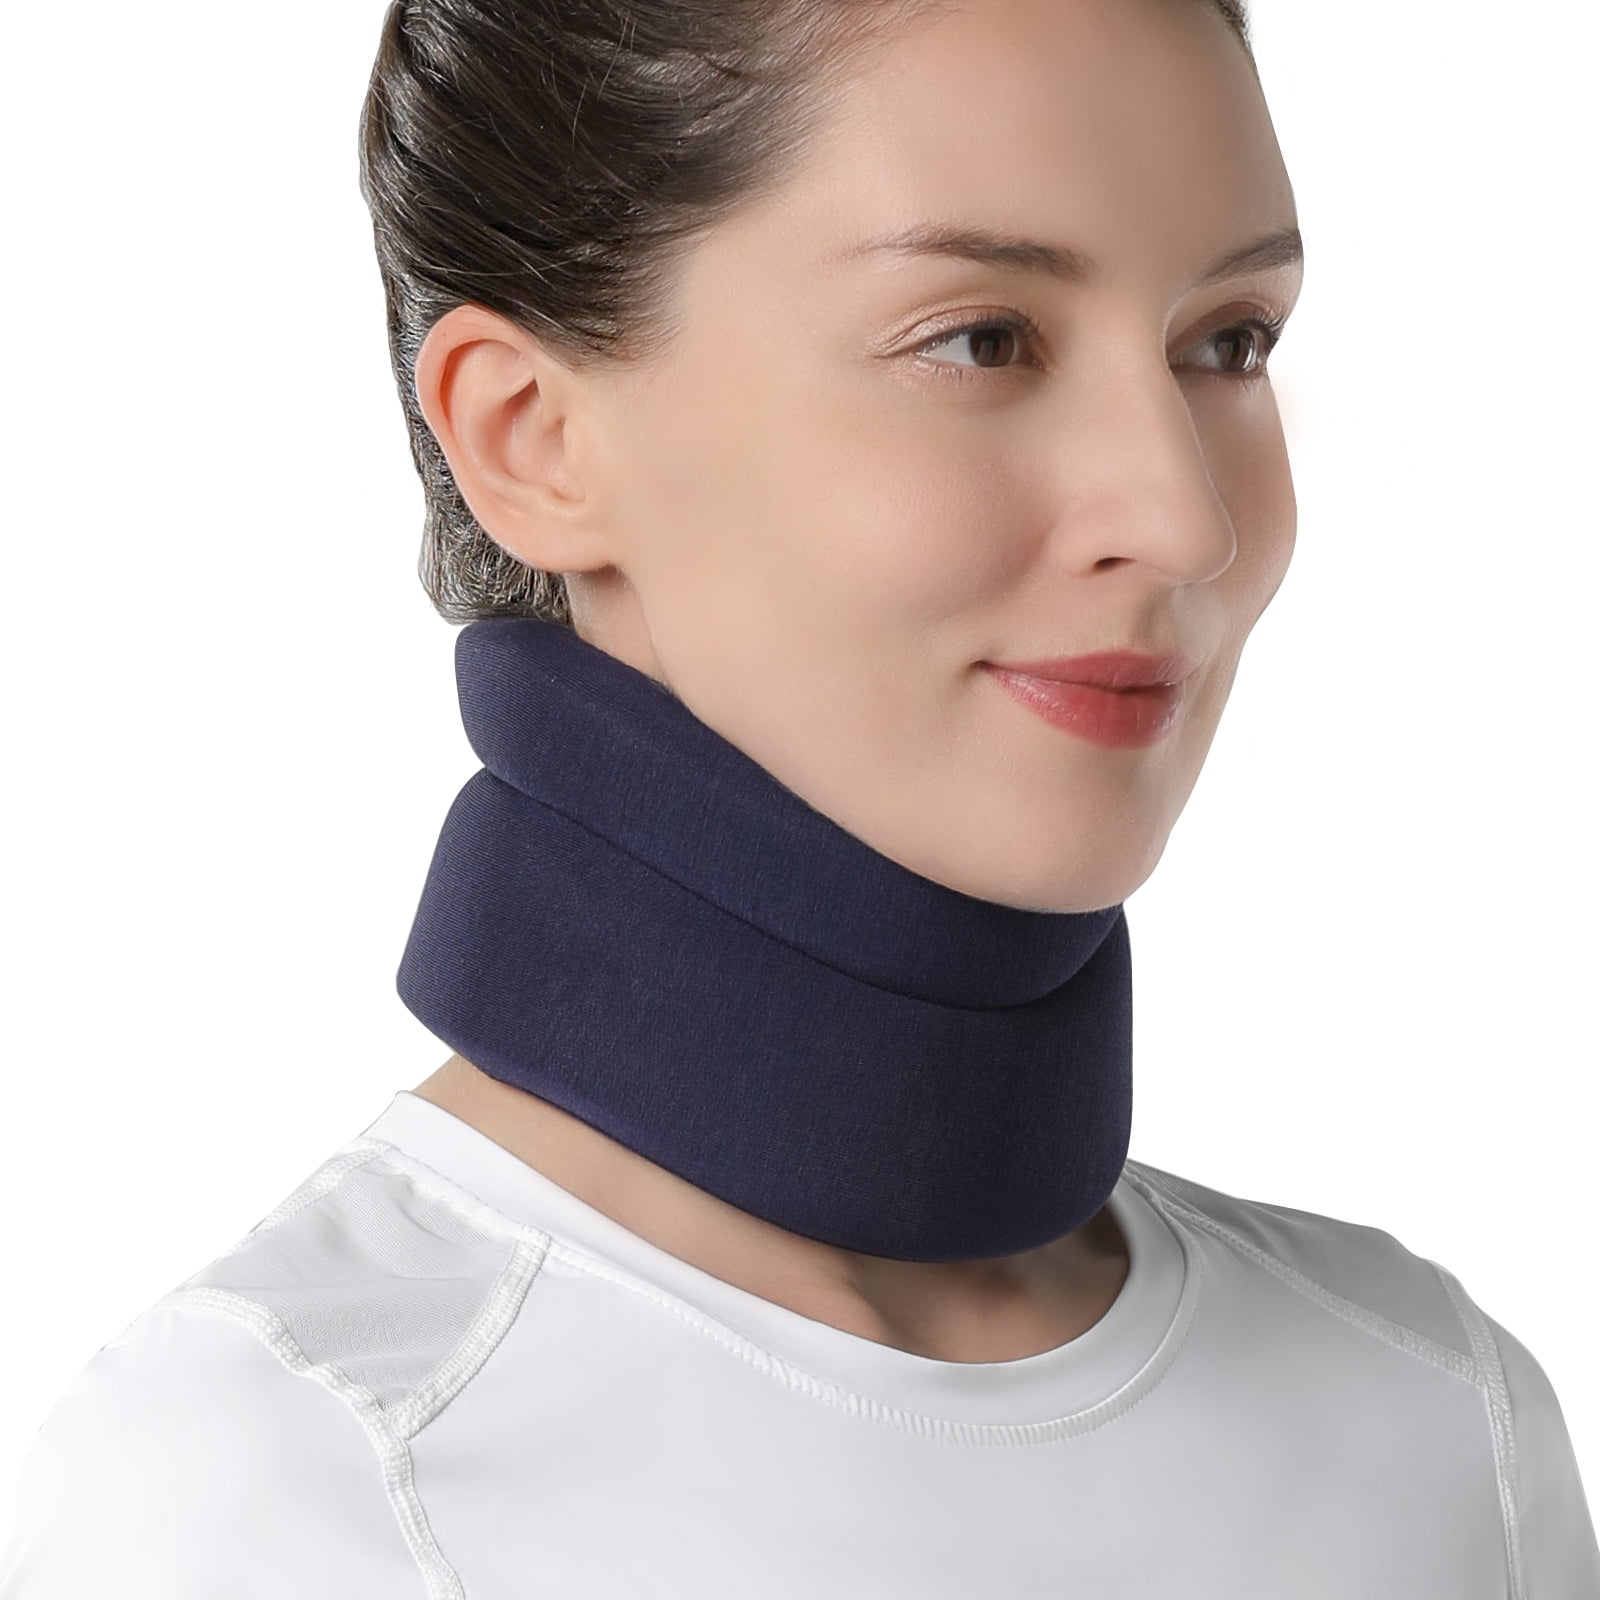 VELPEAU Neck Brace - Foam Cervical Collar - Soft Neck Support Can Be ...